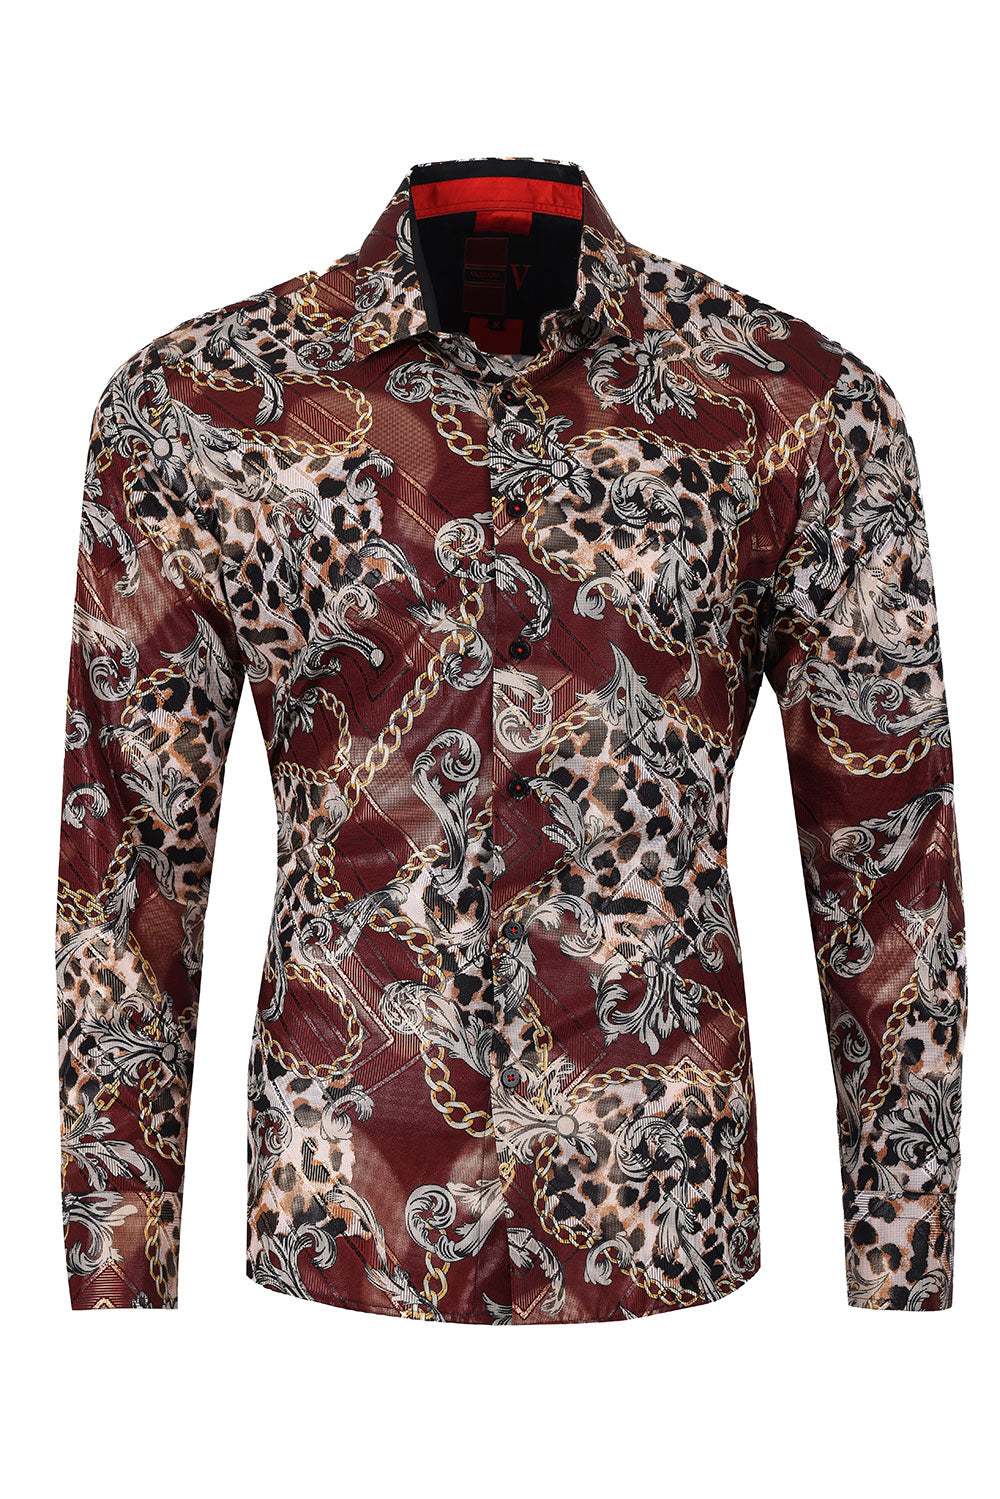 Vassari Mens Leopard Chain Print Design Button Down Luxury Shirt  2VS147 Wine and Gold